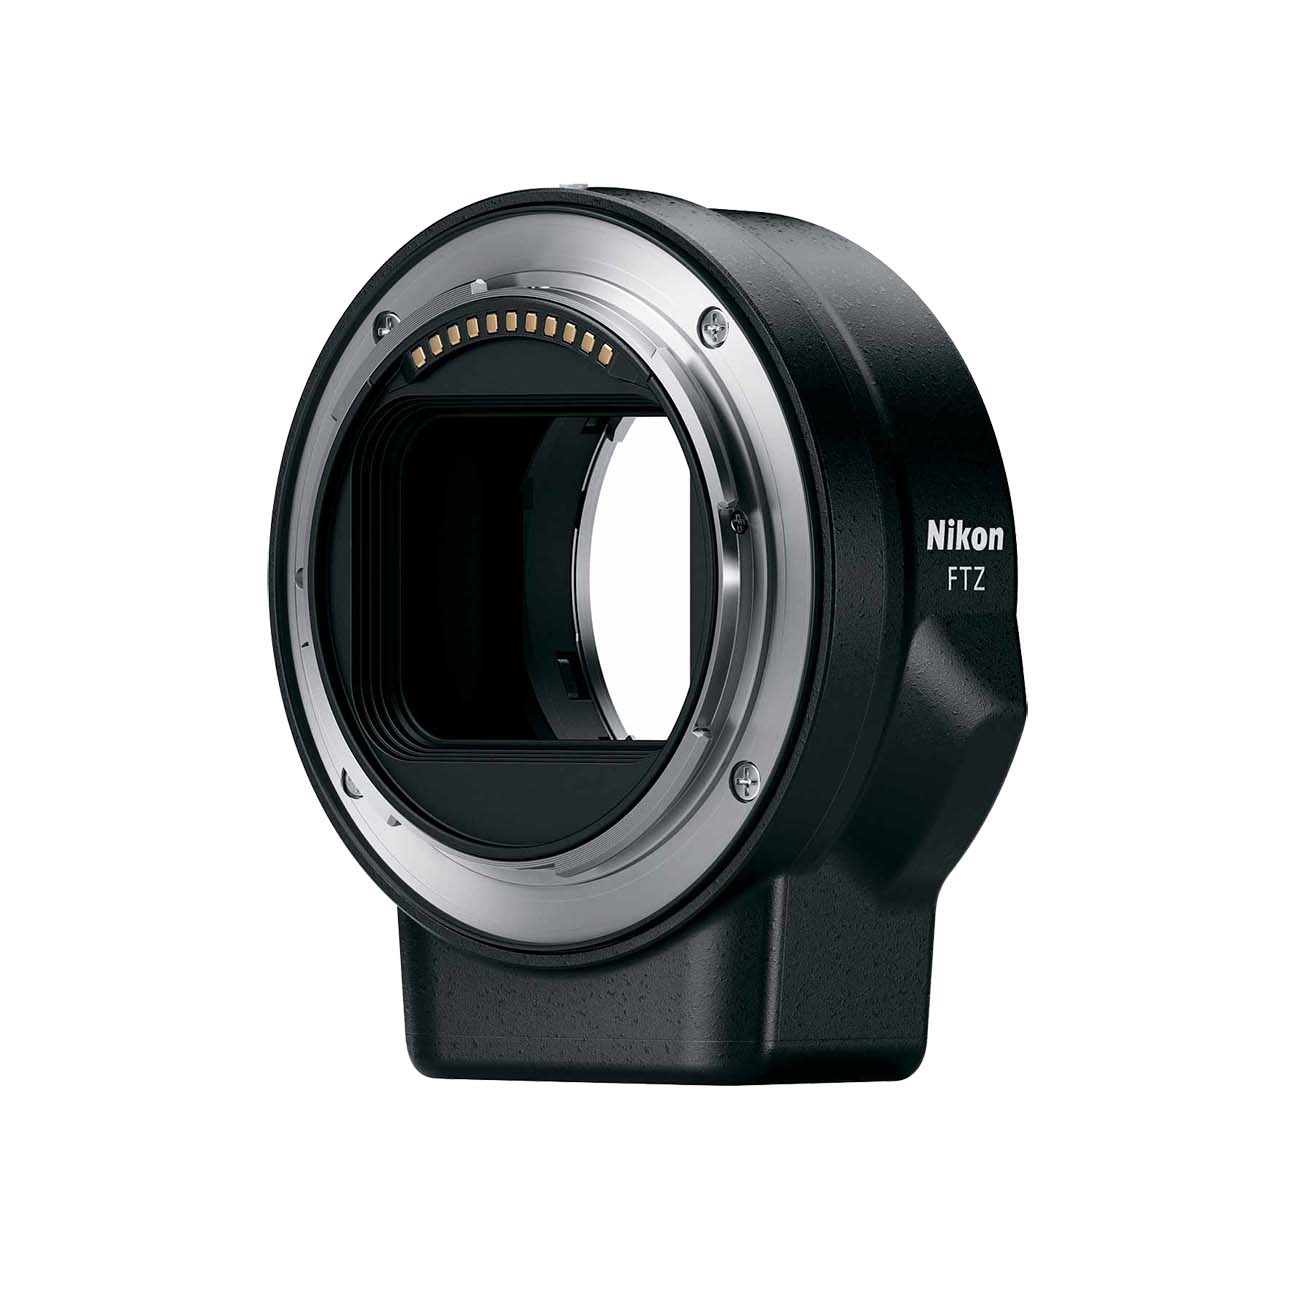 Nikon Z5 Body   FTZ ll Adapter Гарантия Производителя. Ростест/ЕАС